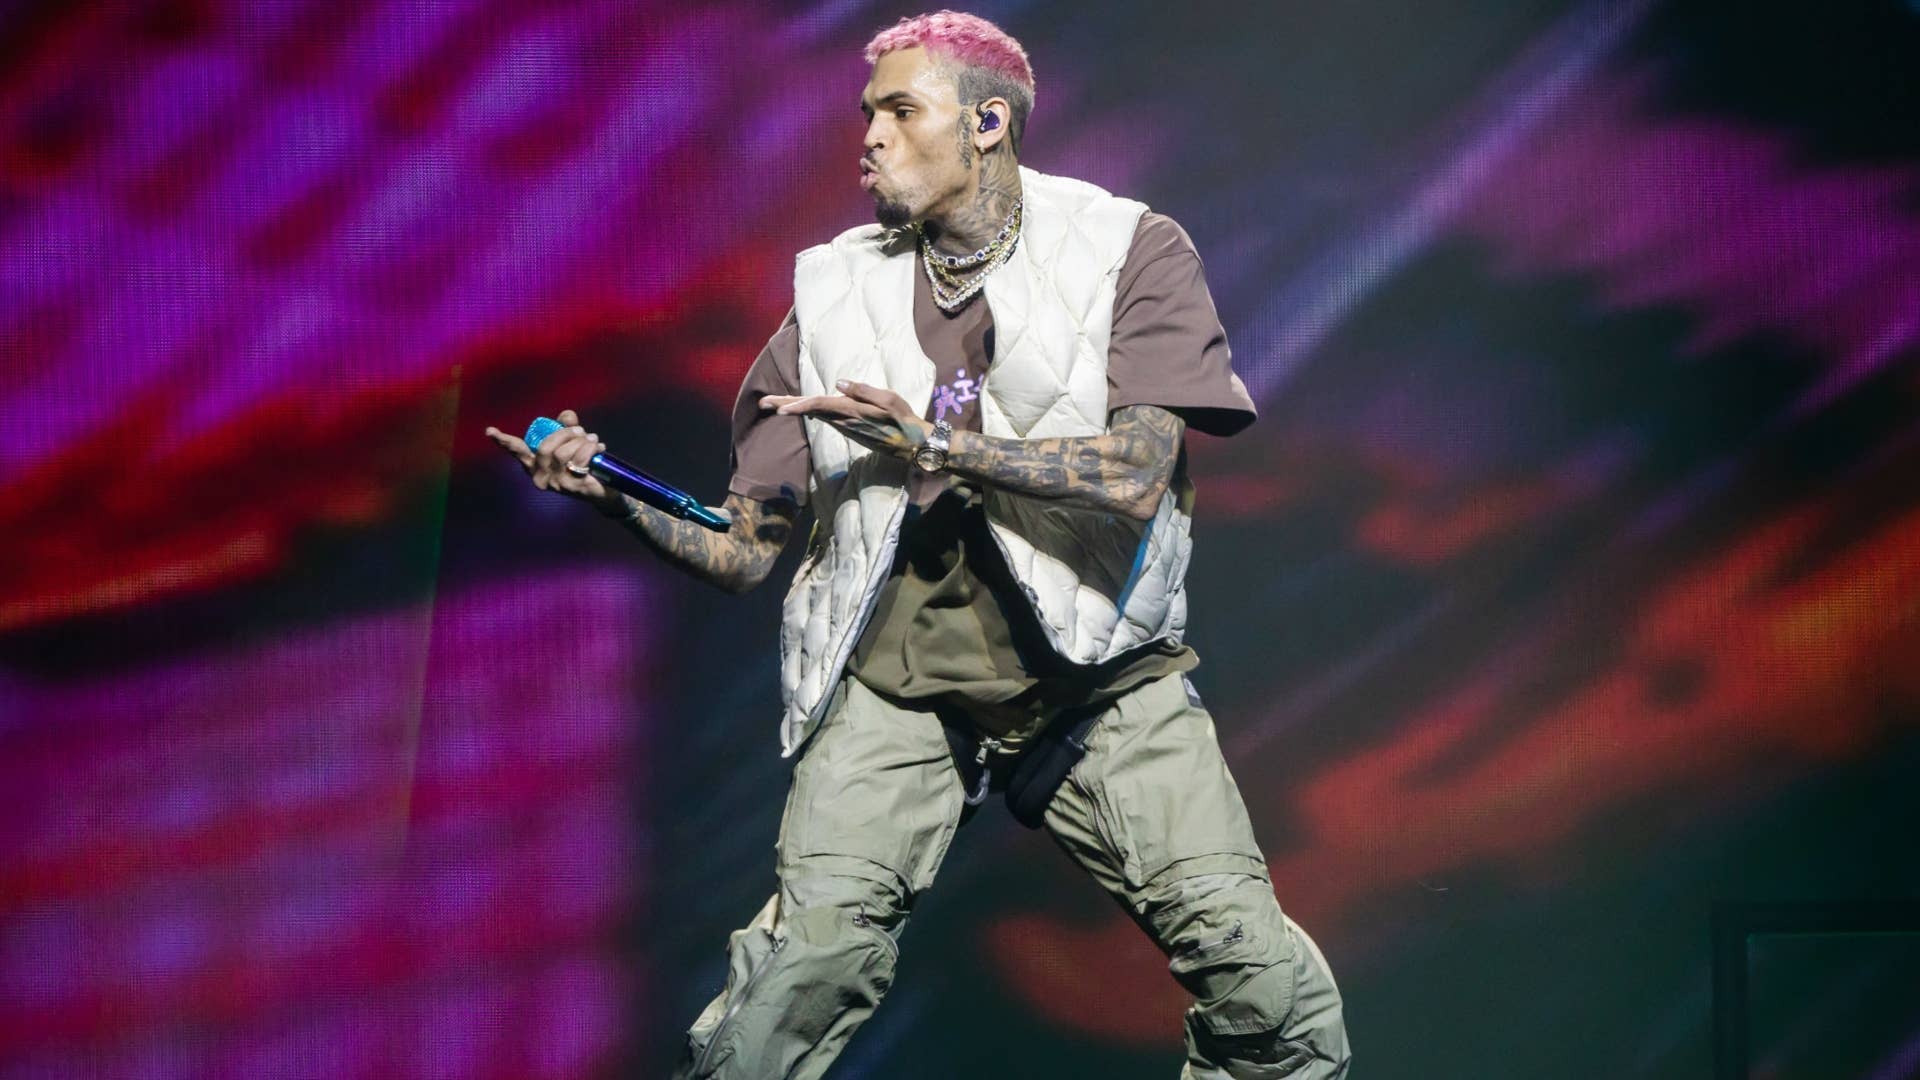 Chris Brown Throws Fan's Phone Dancing